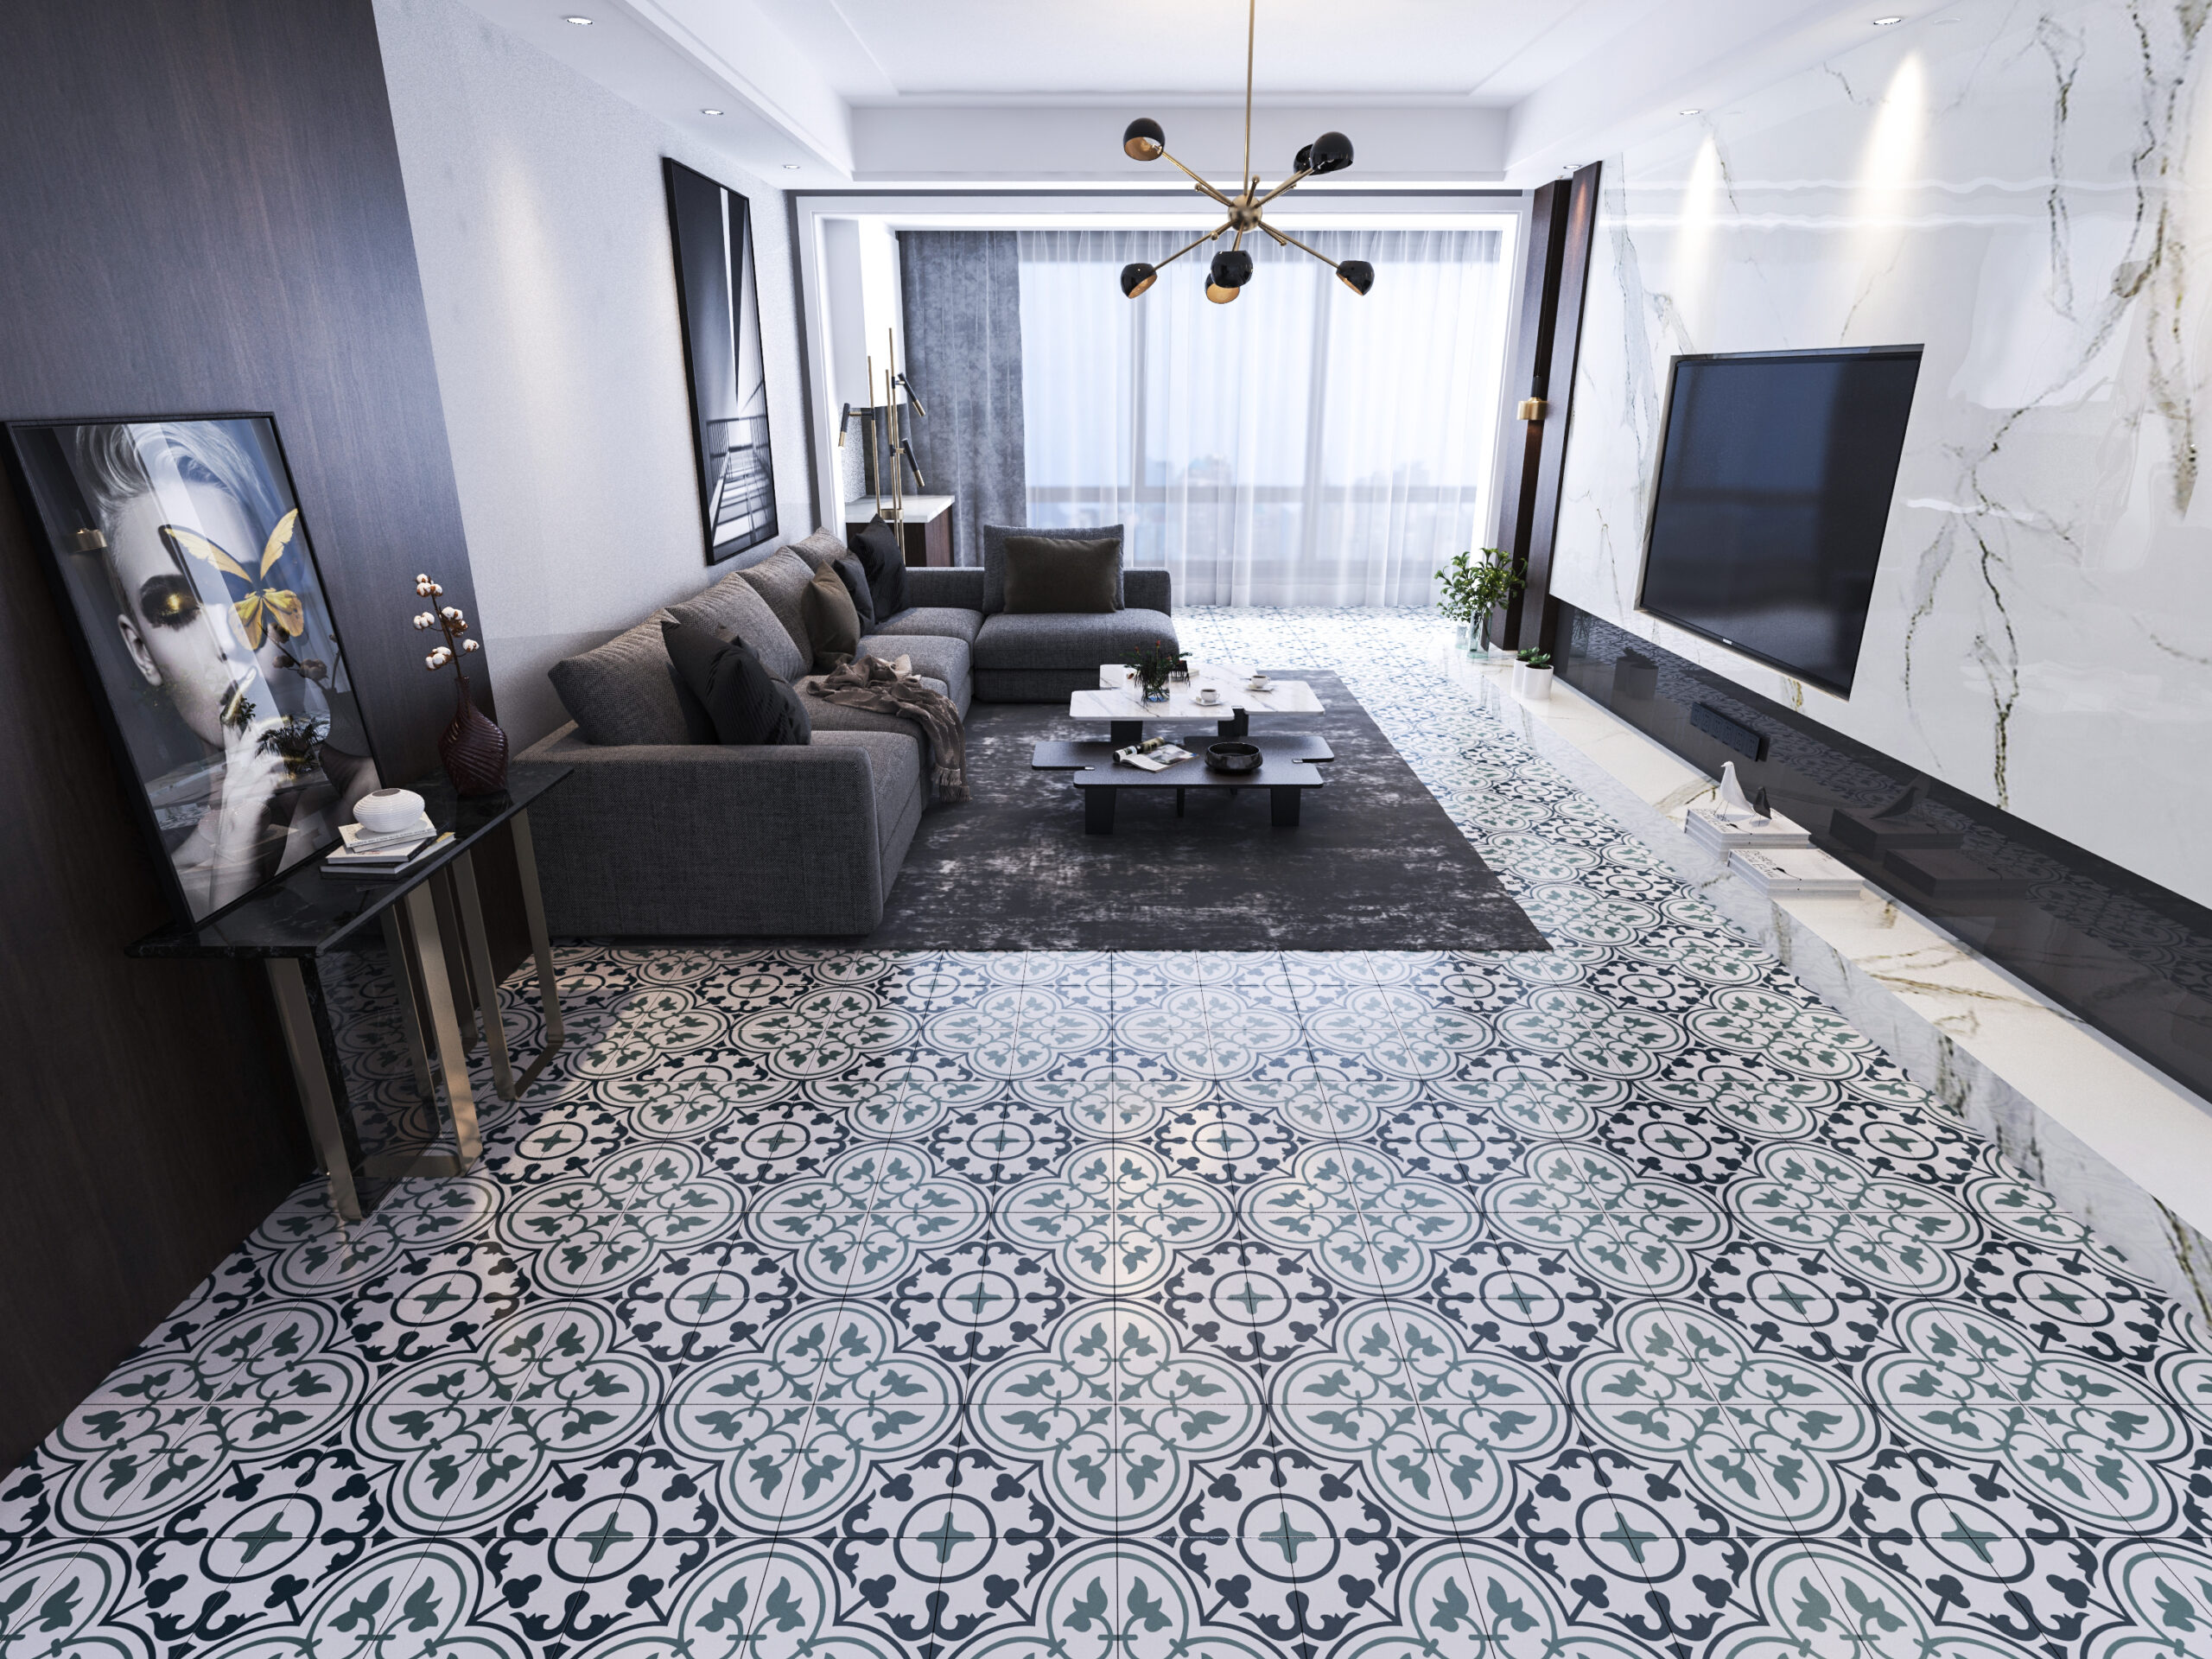 Tiles in Living Room scaled Carreaux de Ciment Classic Victorian